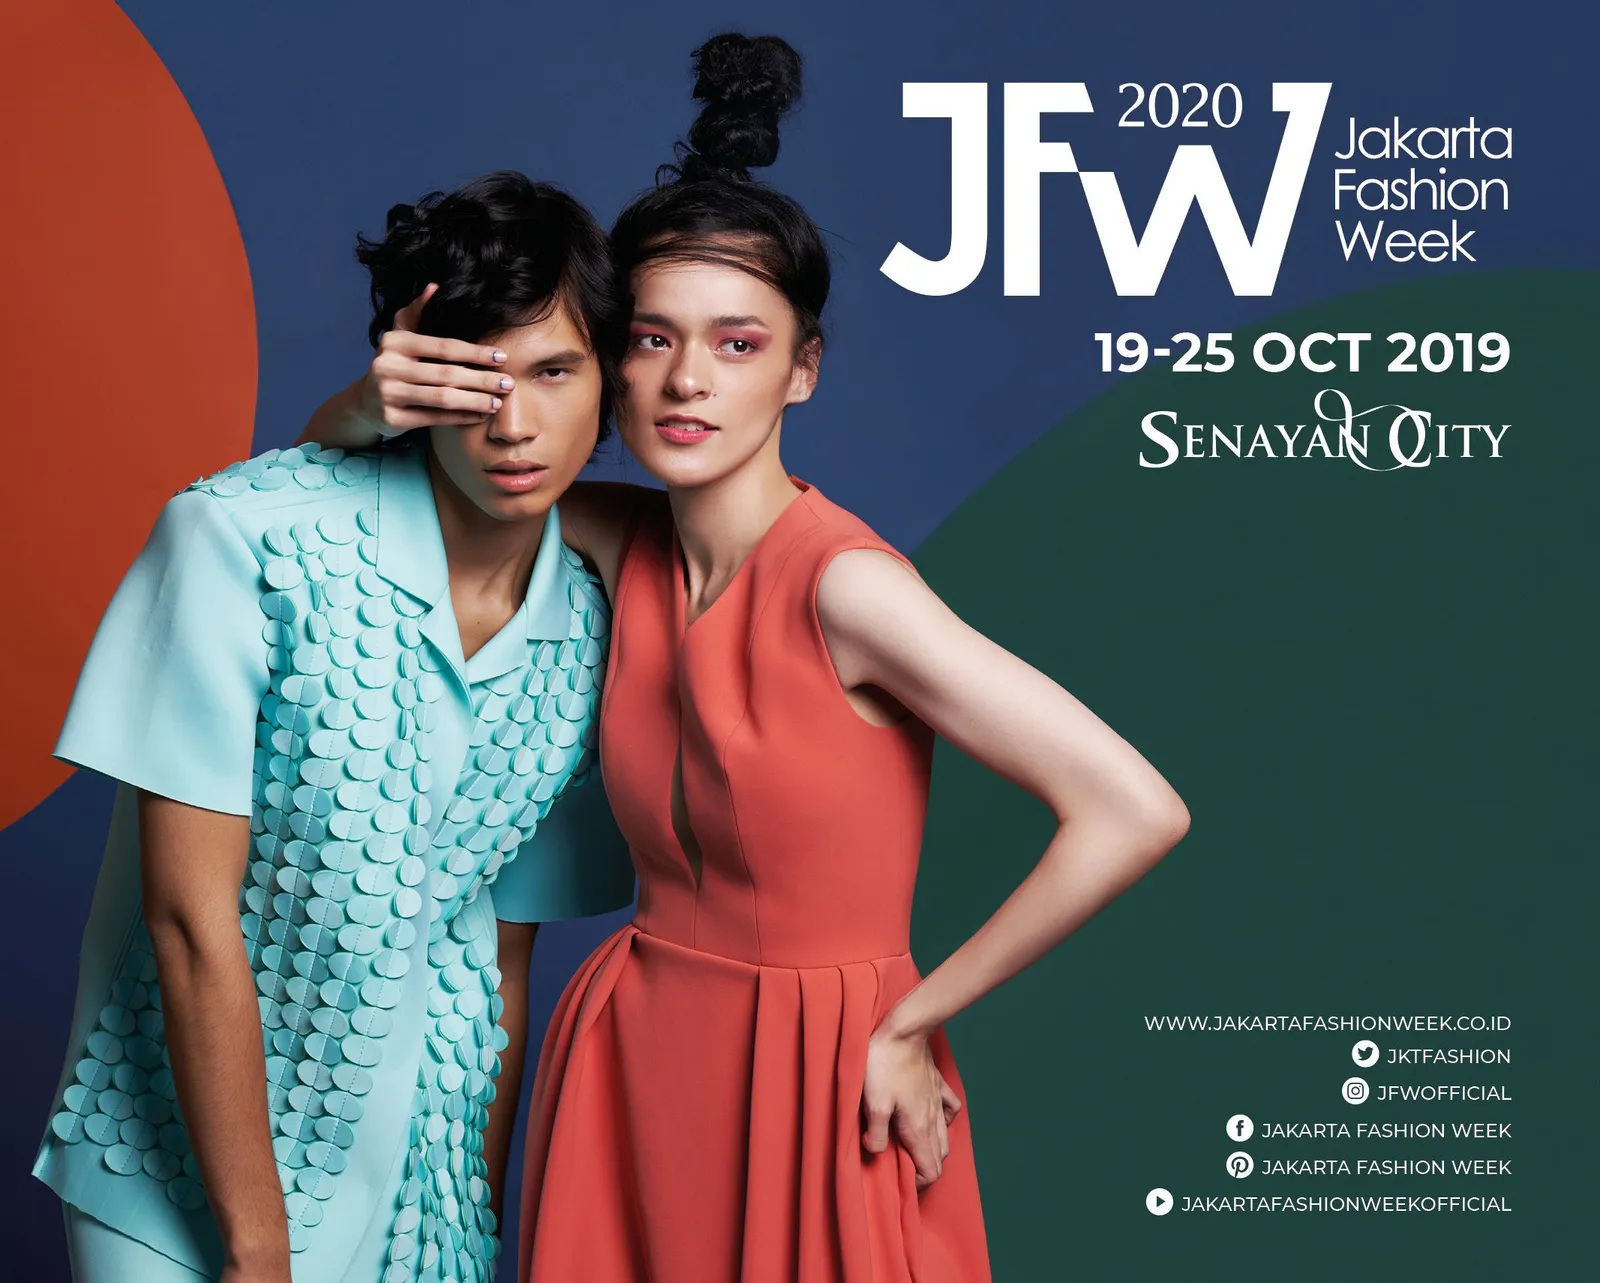 Kejutan Baru di Jakarta Fashion Week 2020, Siap-siap!